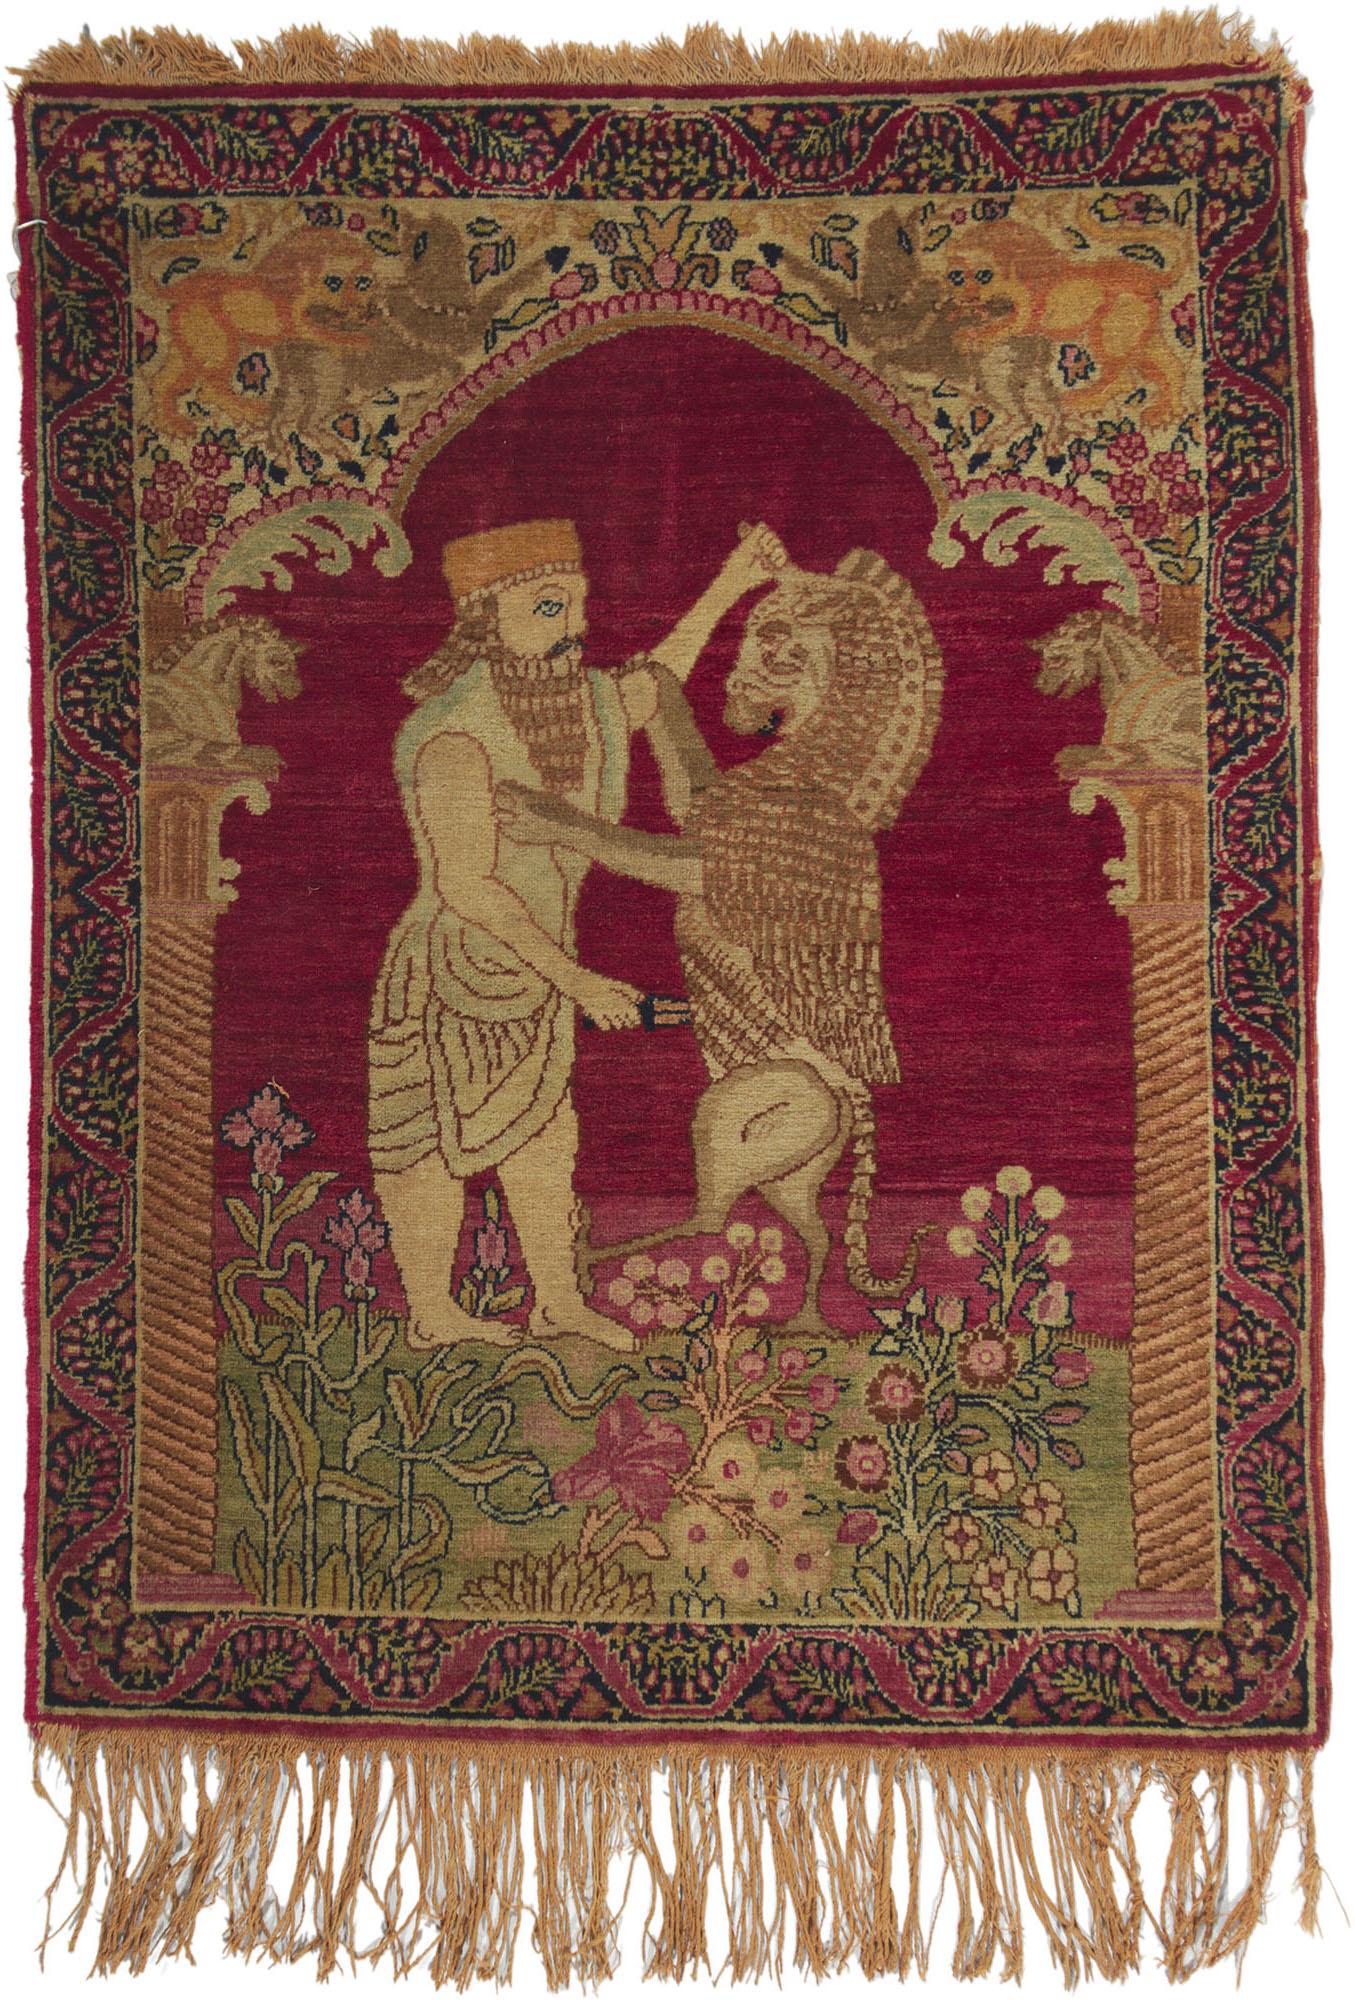 Antique Kerman Pictorial Rug Lion & King Darius Achaemenid Mythological Tapestry For Sale